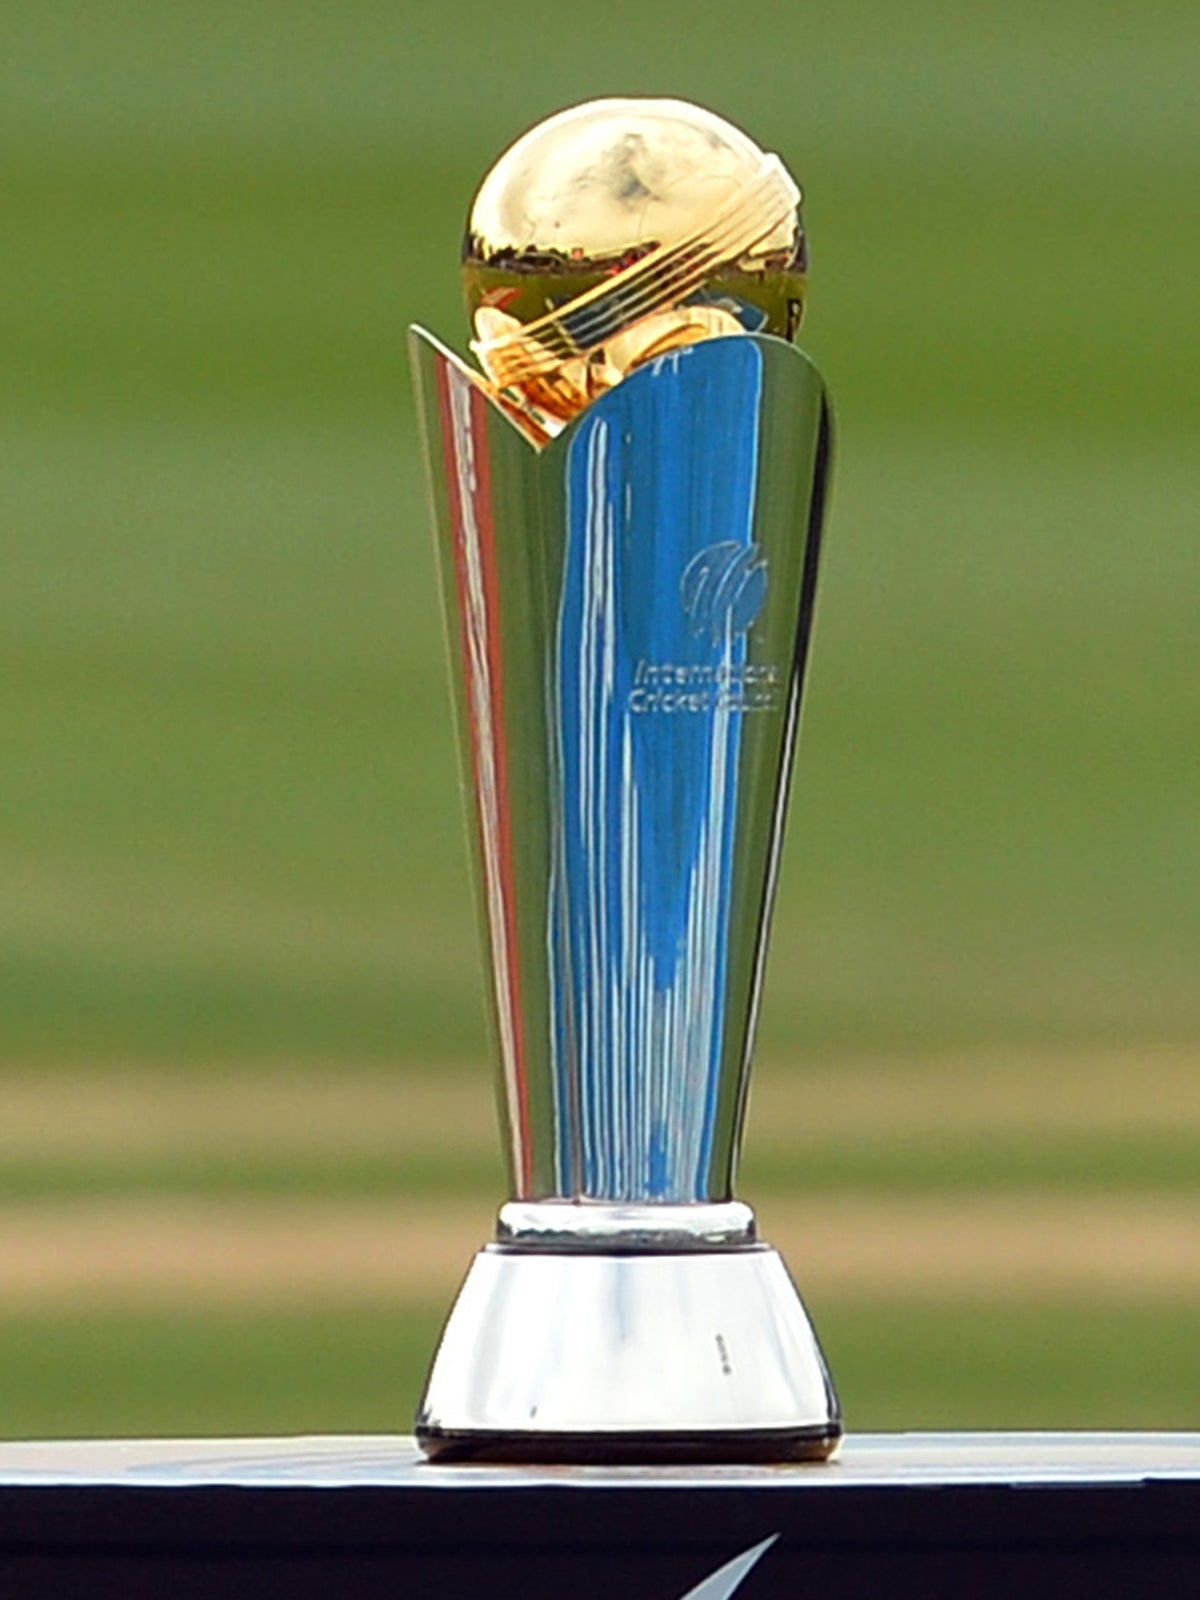 champion trophy cricket